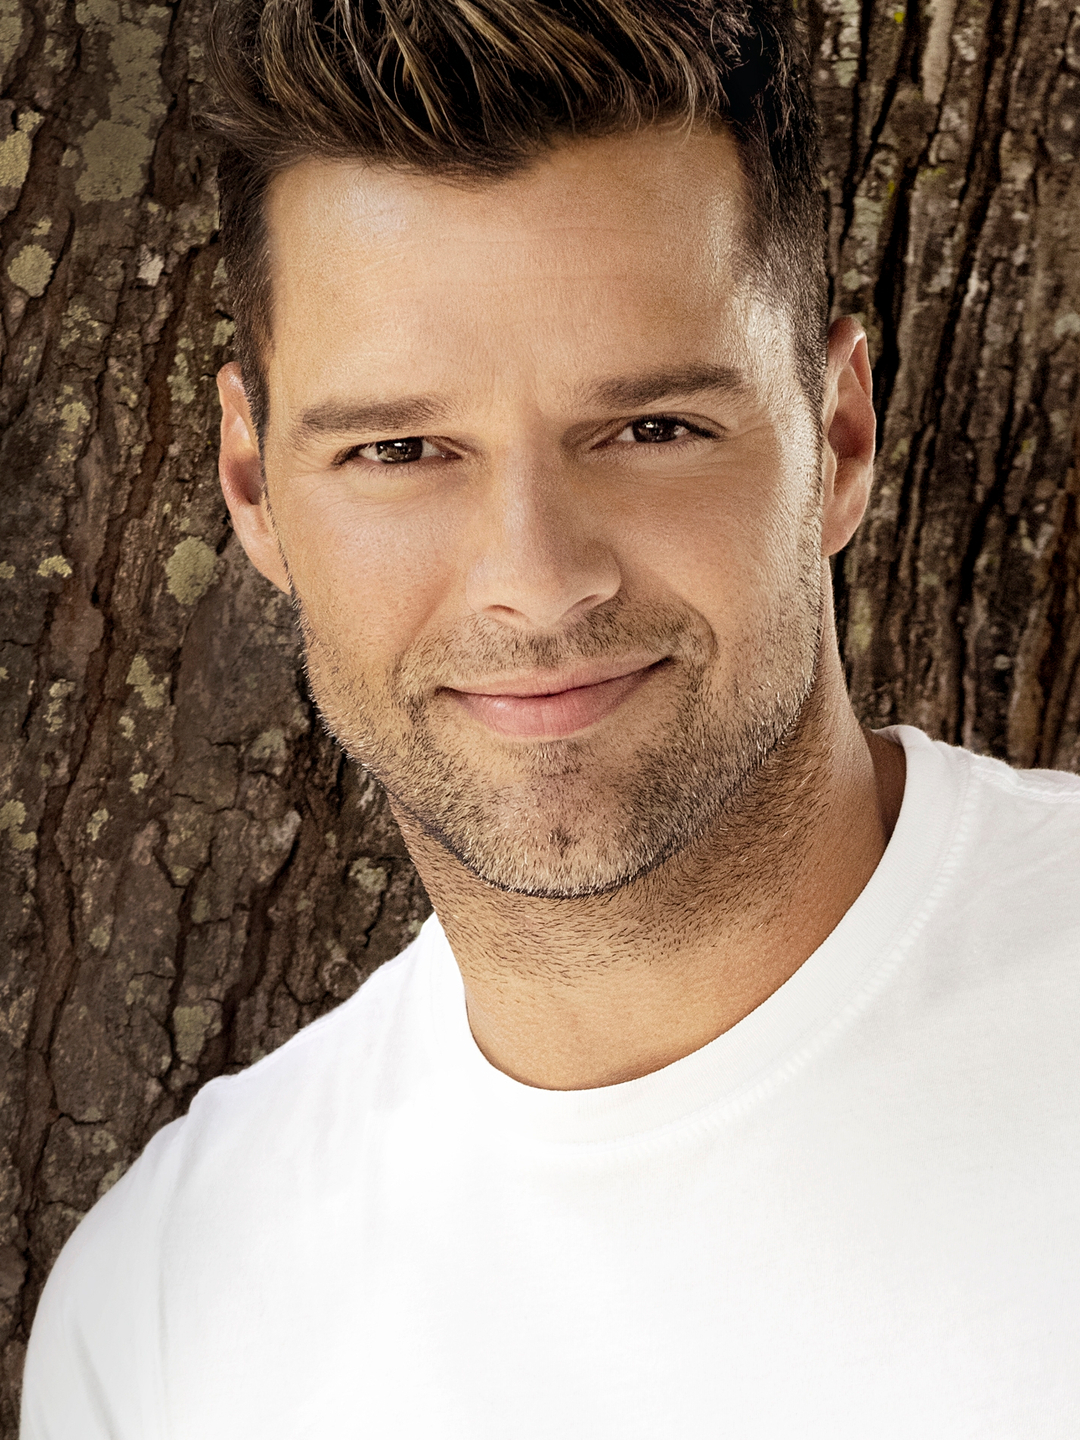 Ricky Martin personal traits